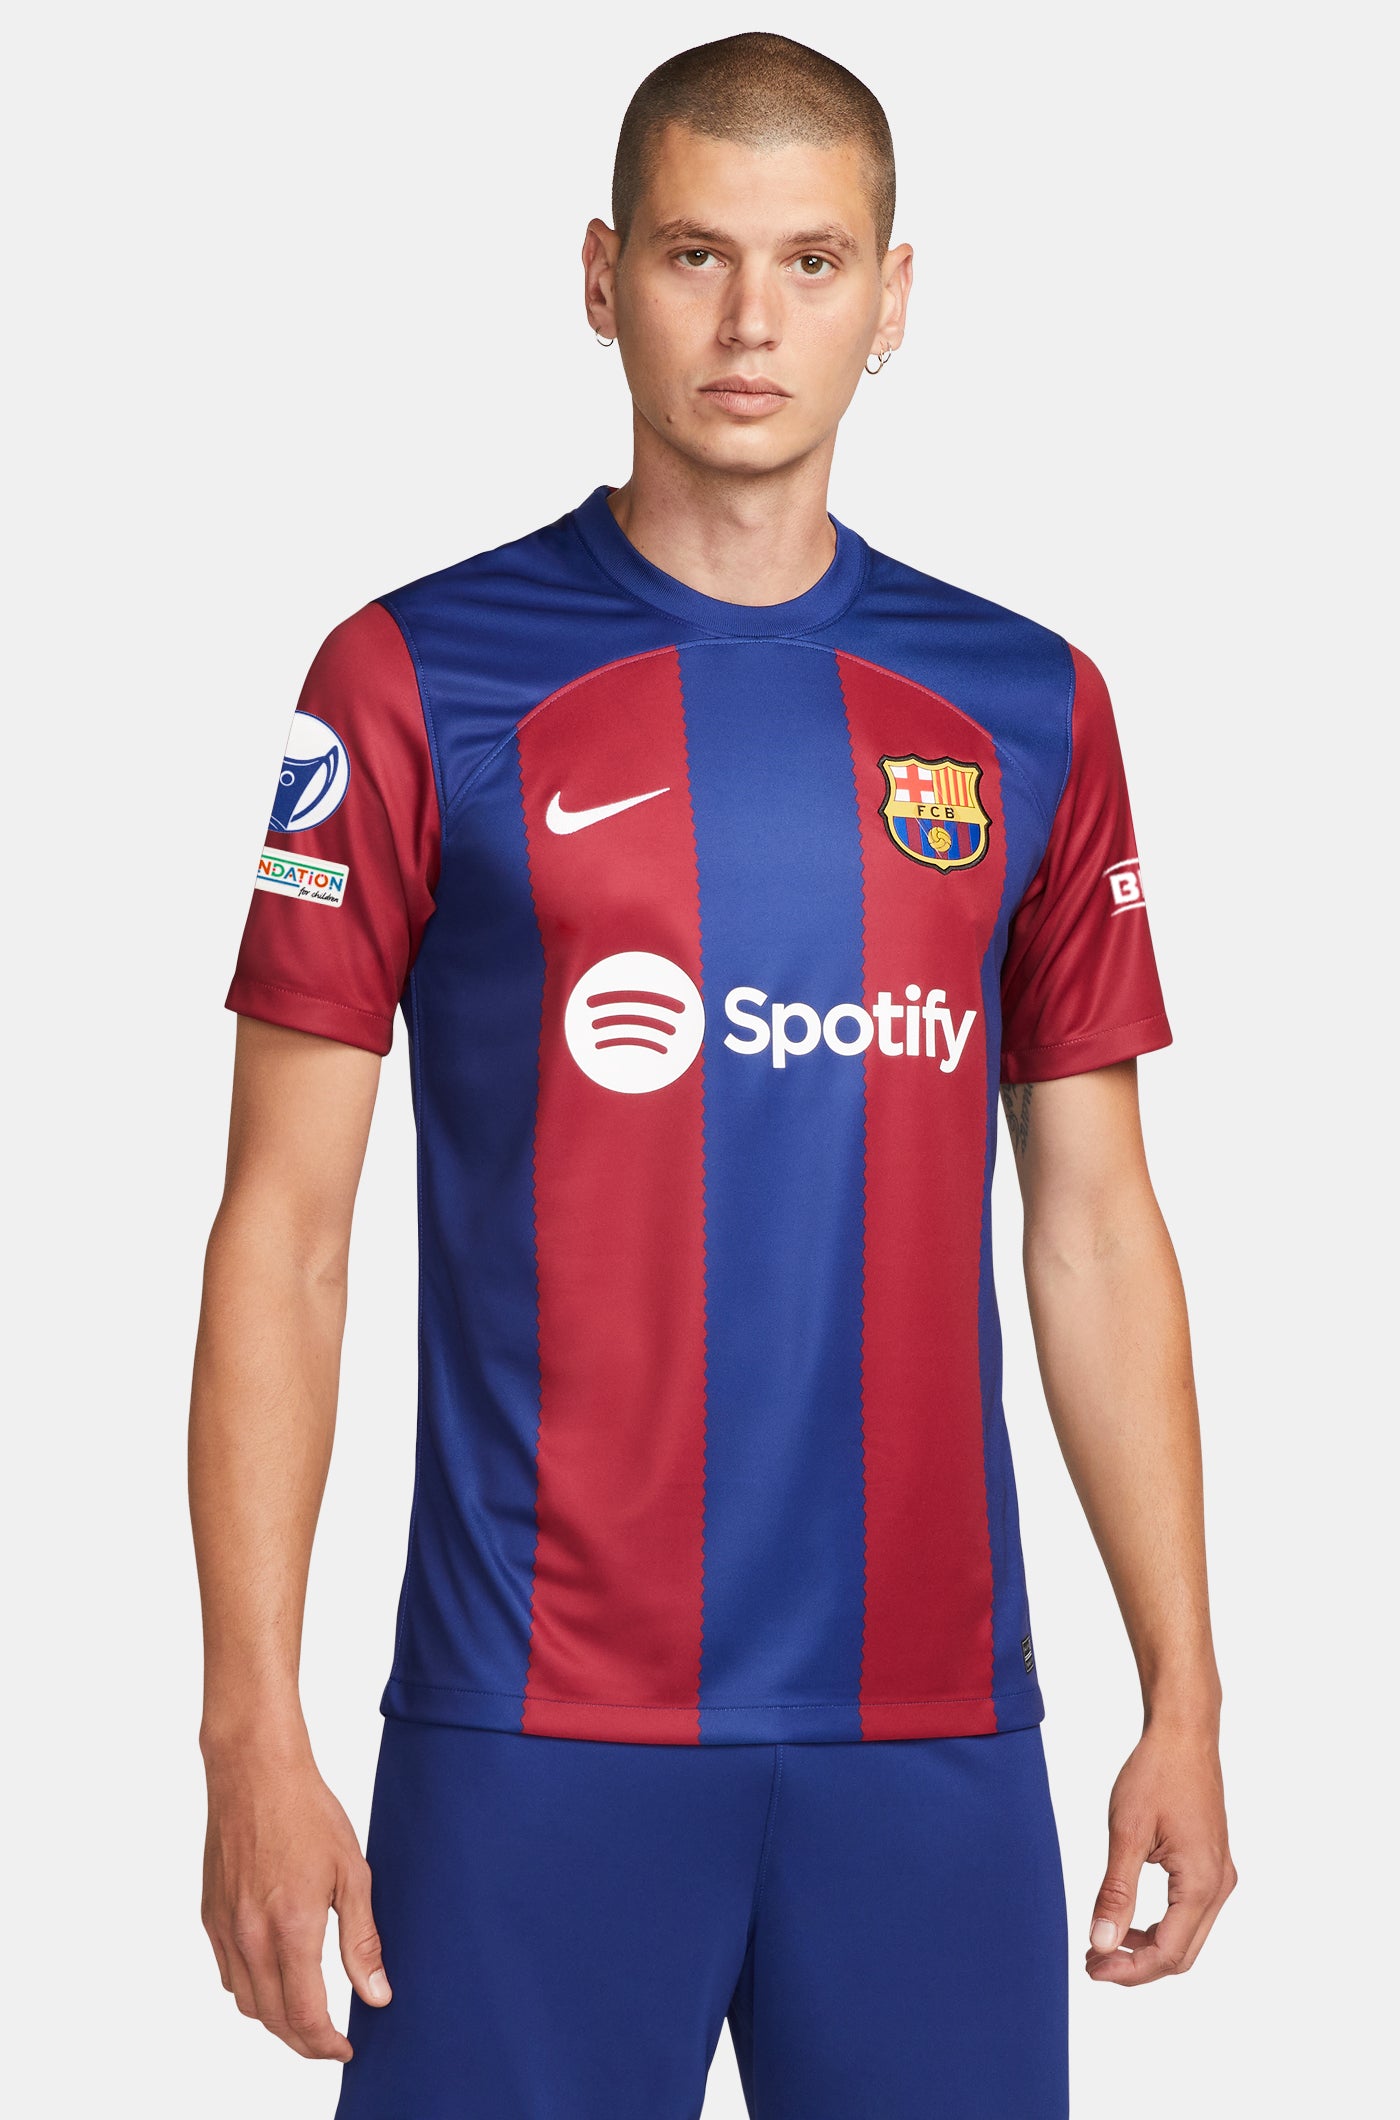 UWCL FC Barcelona home shirt 23/24 - Men - AITANA